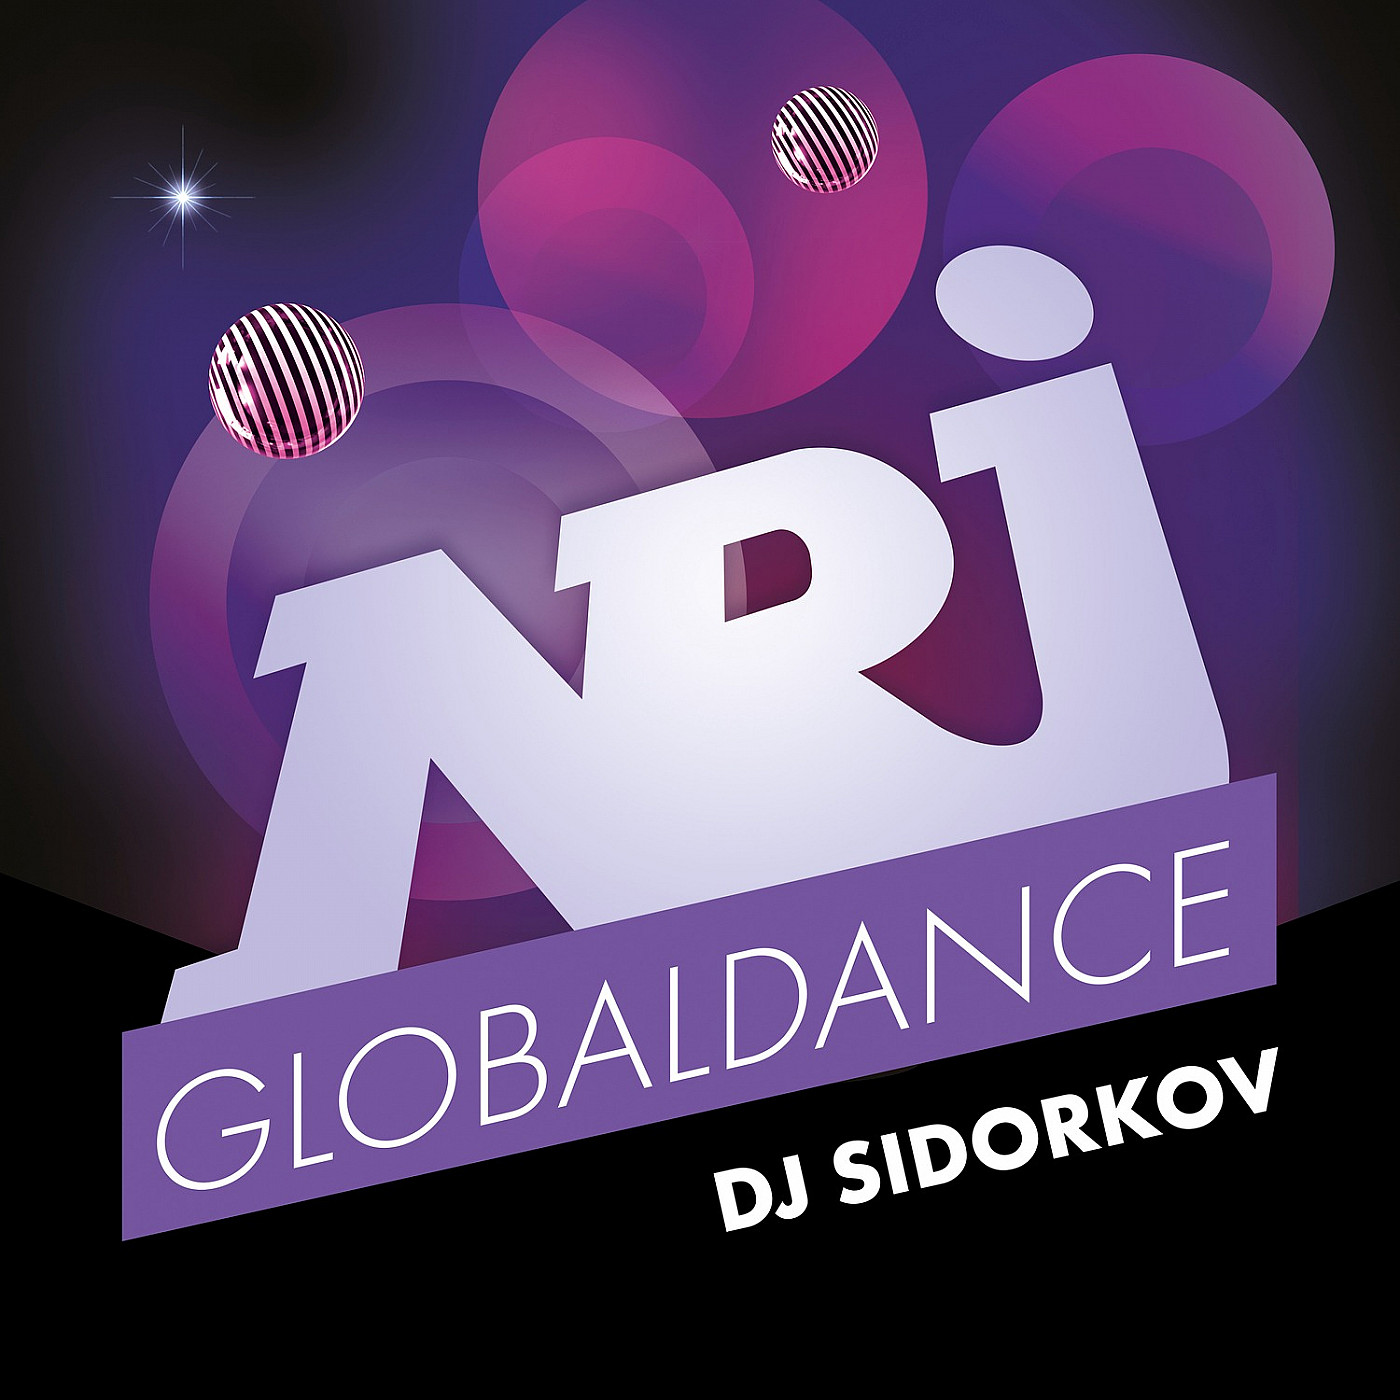 NRJ GLOBALDANCE by DJ SIDORKOV #090